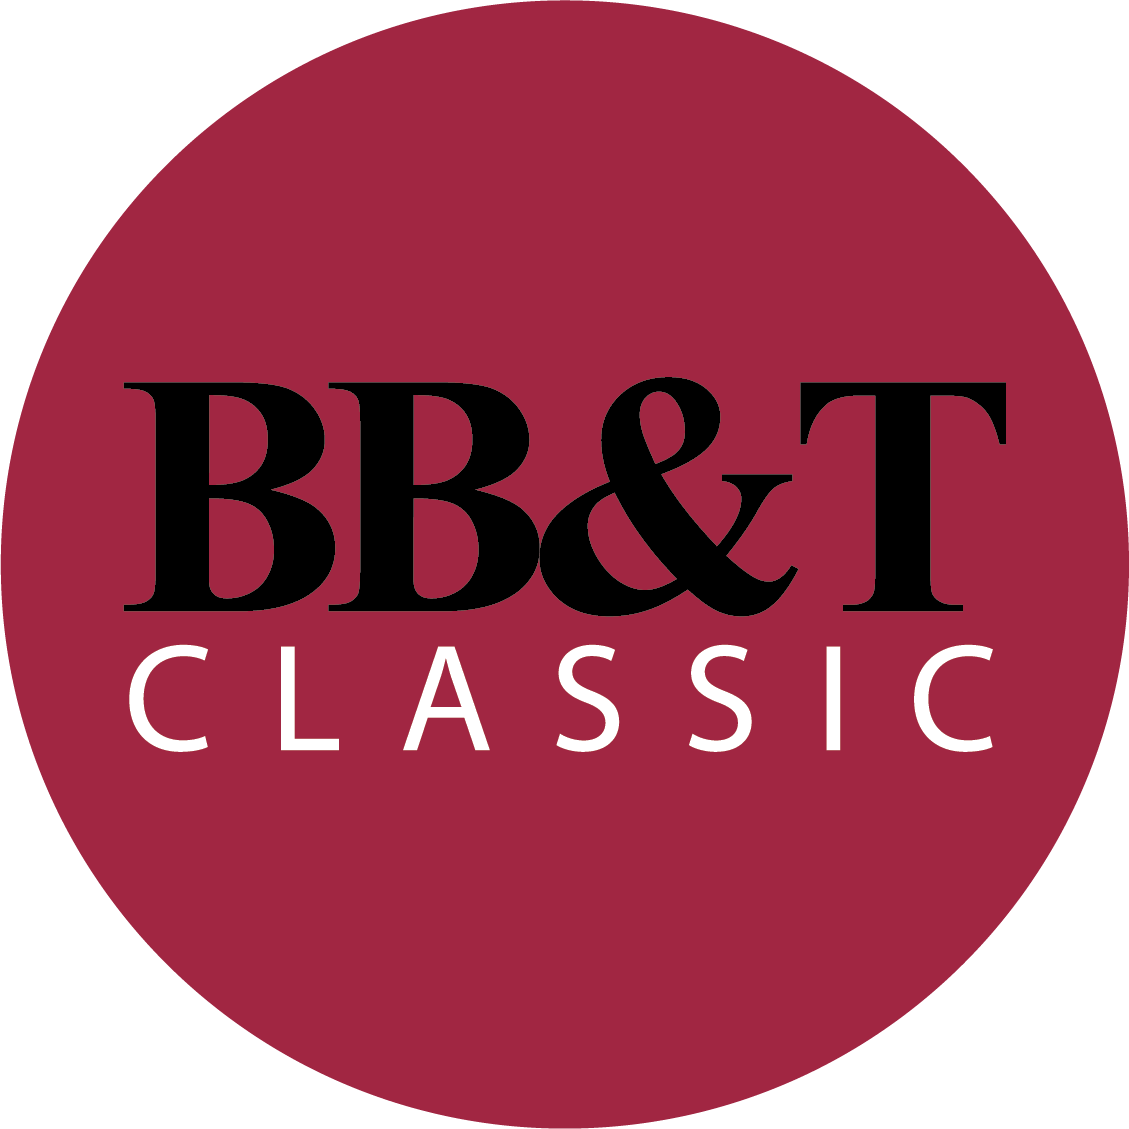 BB&T Classic logo